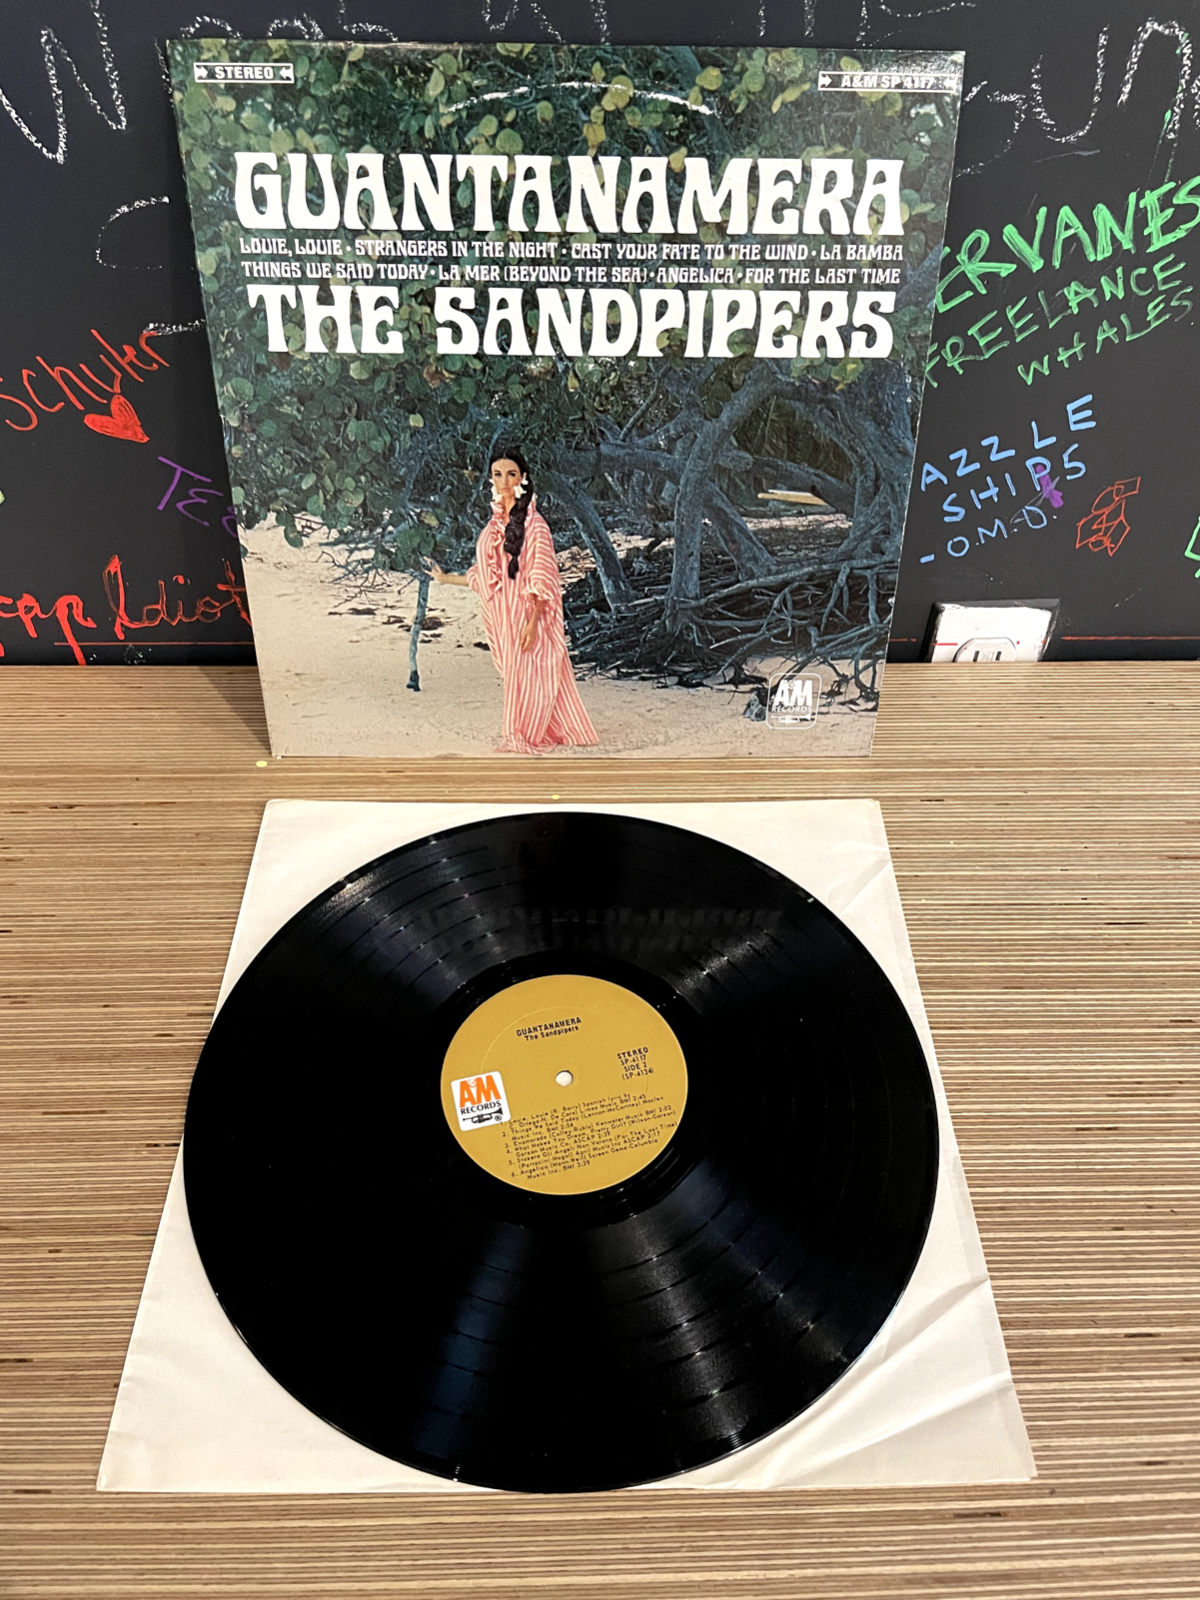 The Sandpipers - Guantanamera vinyl LP (1966)